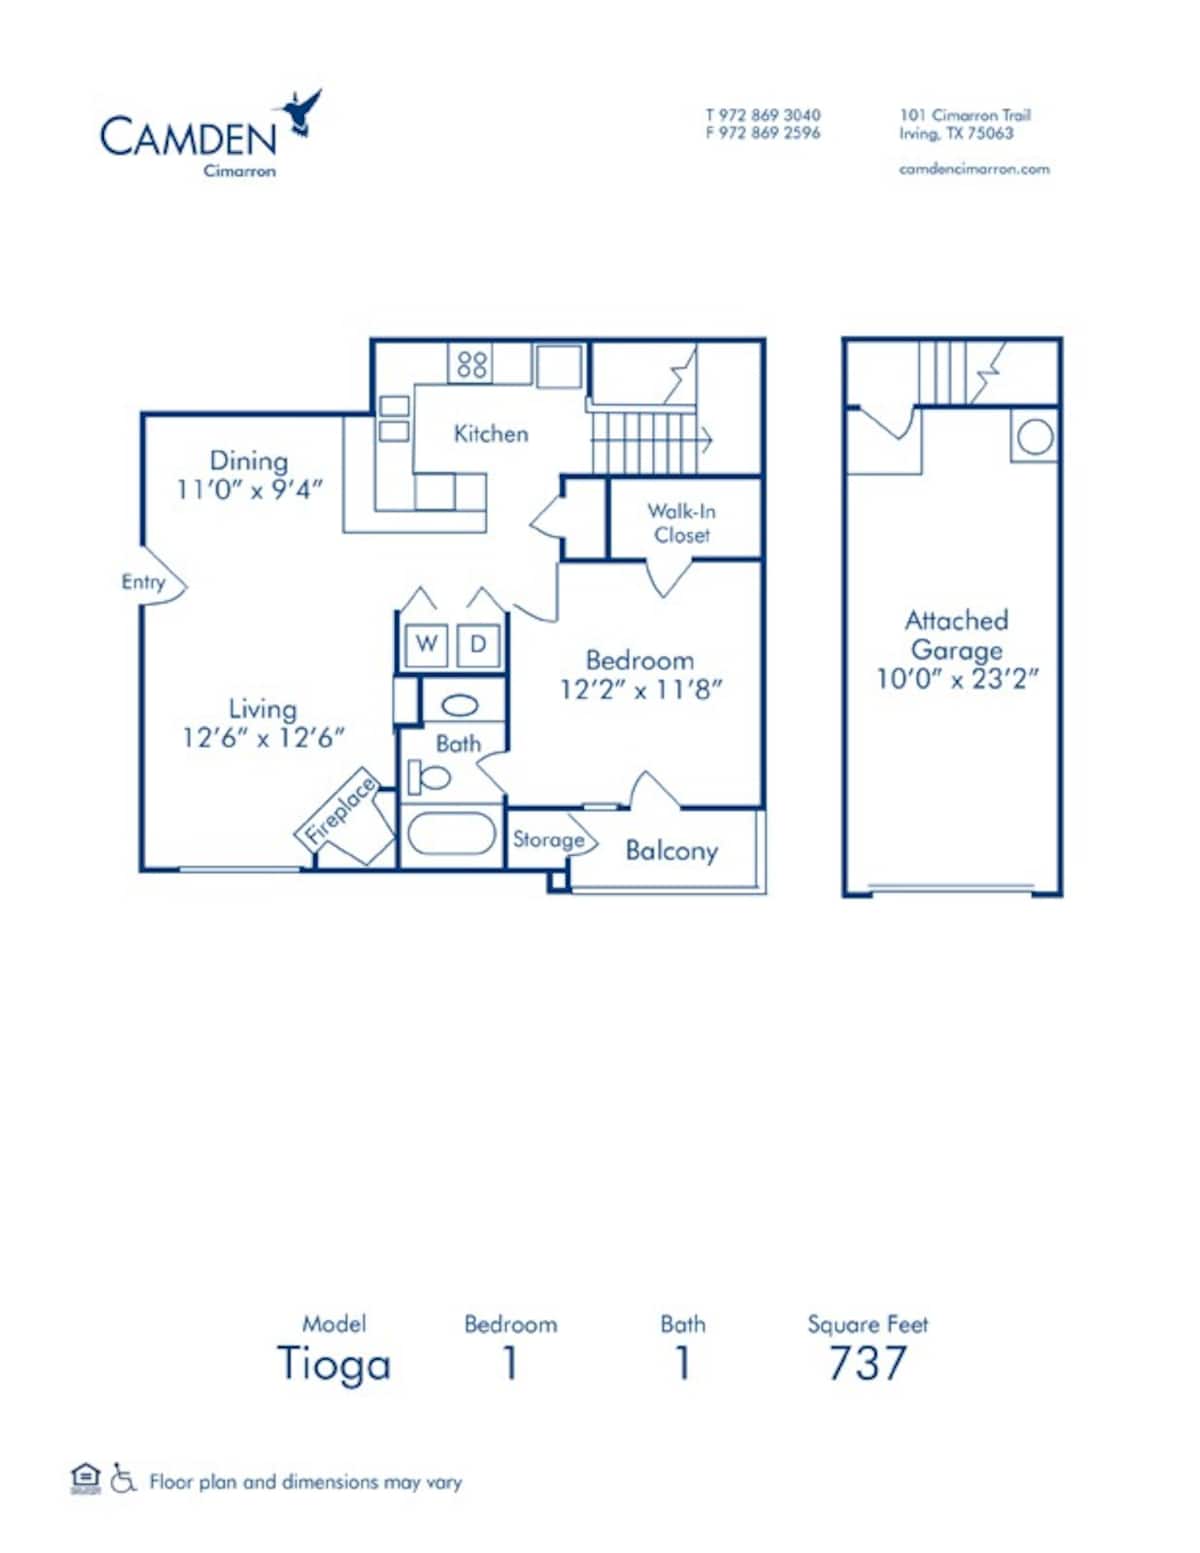 Floorplan diagram for Tioga, showing 1 bedroom